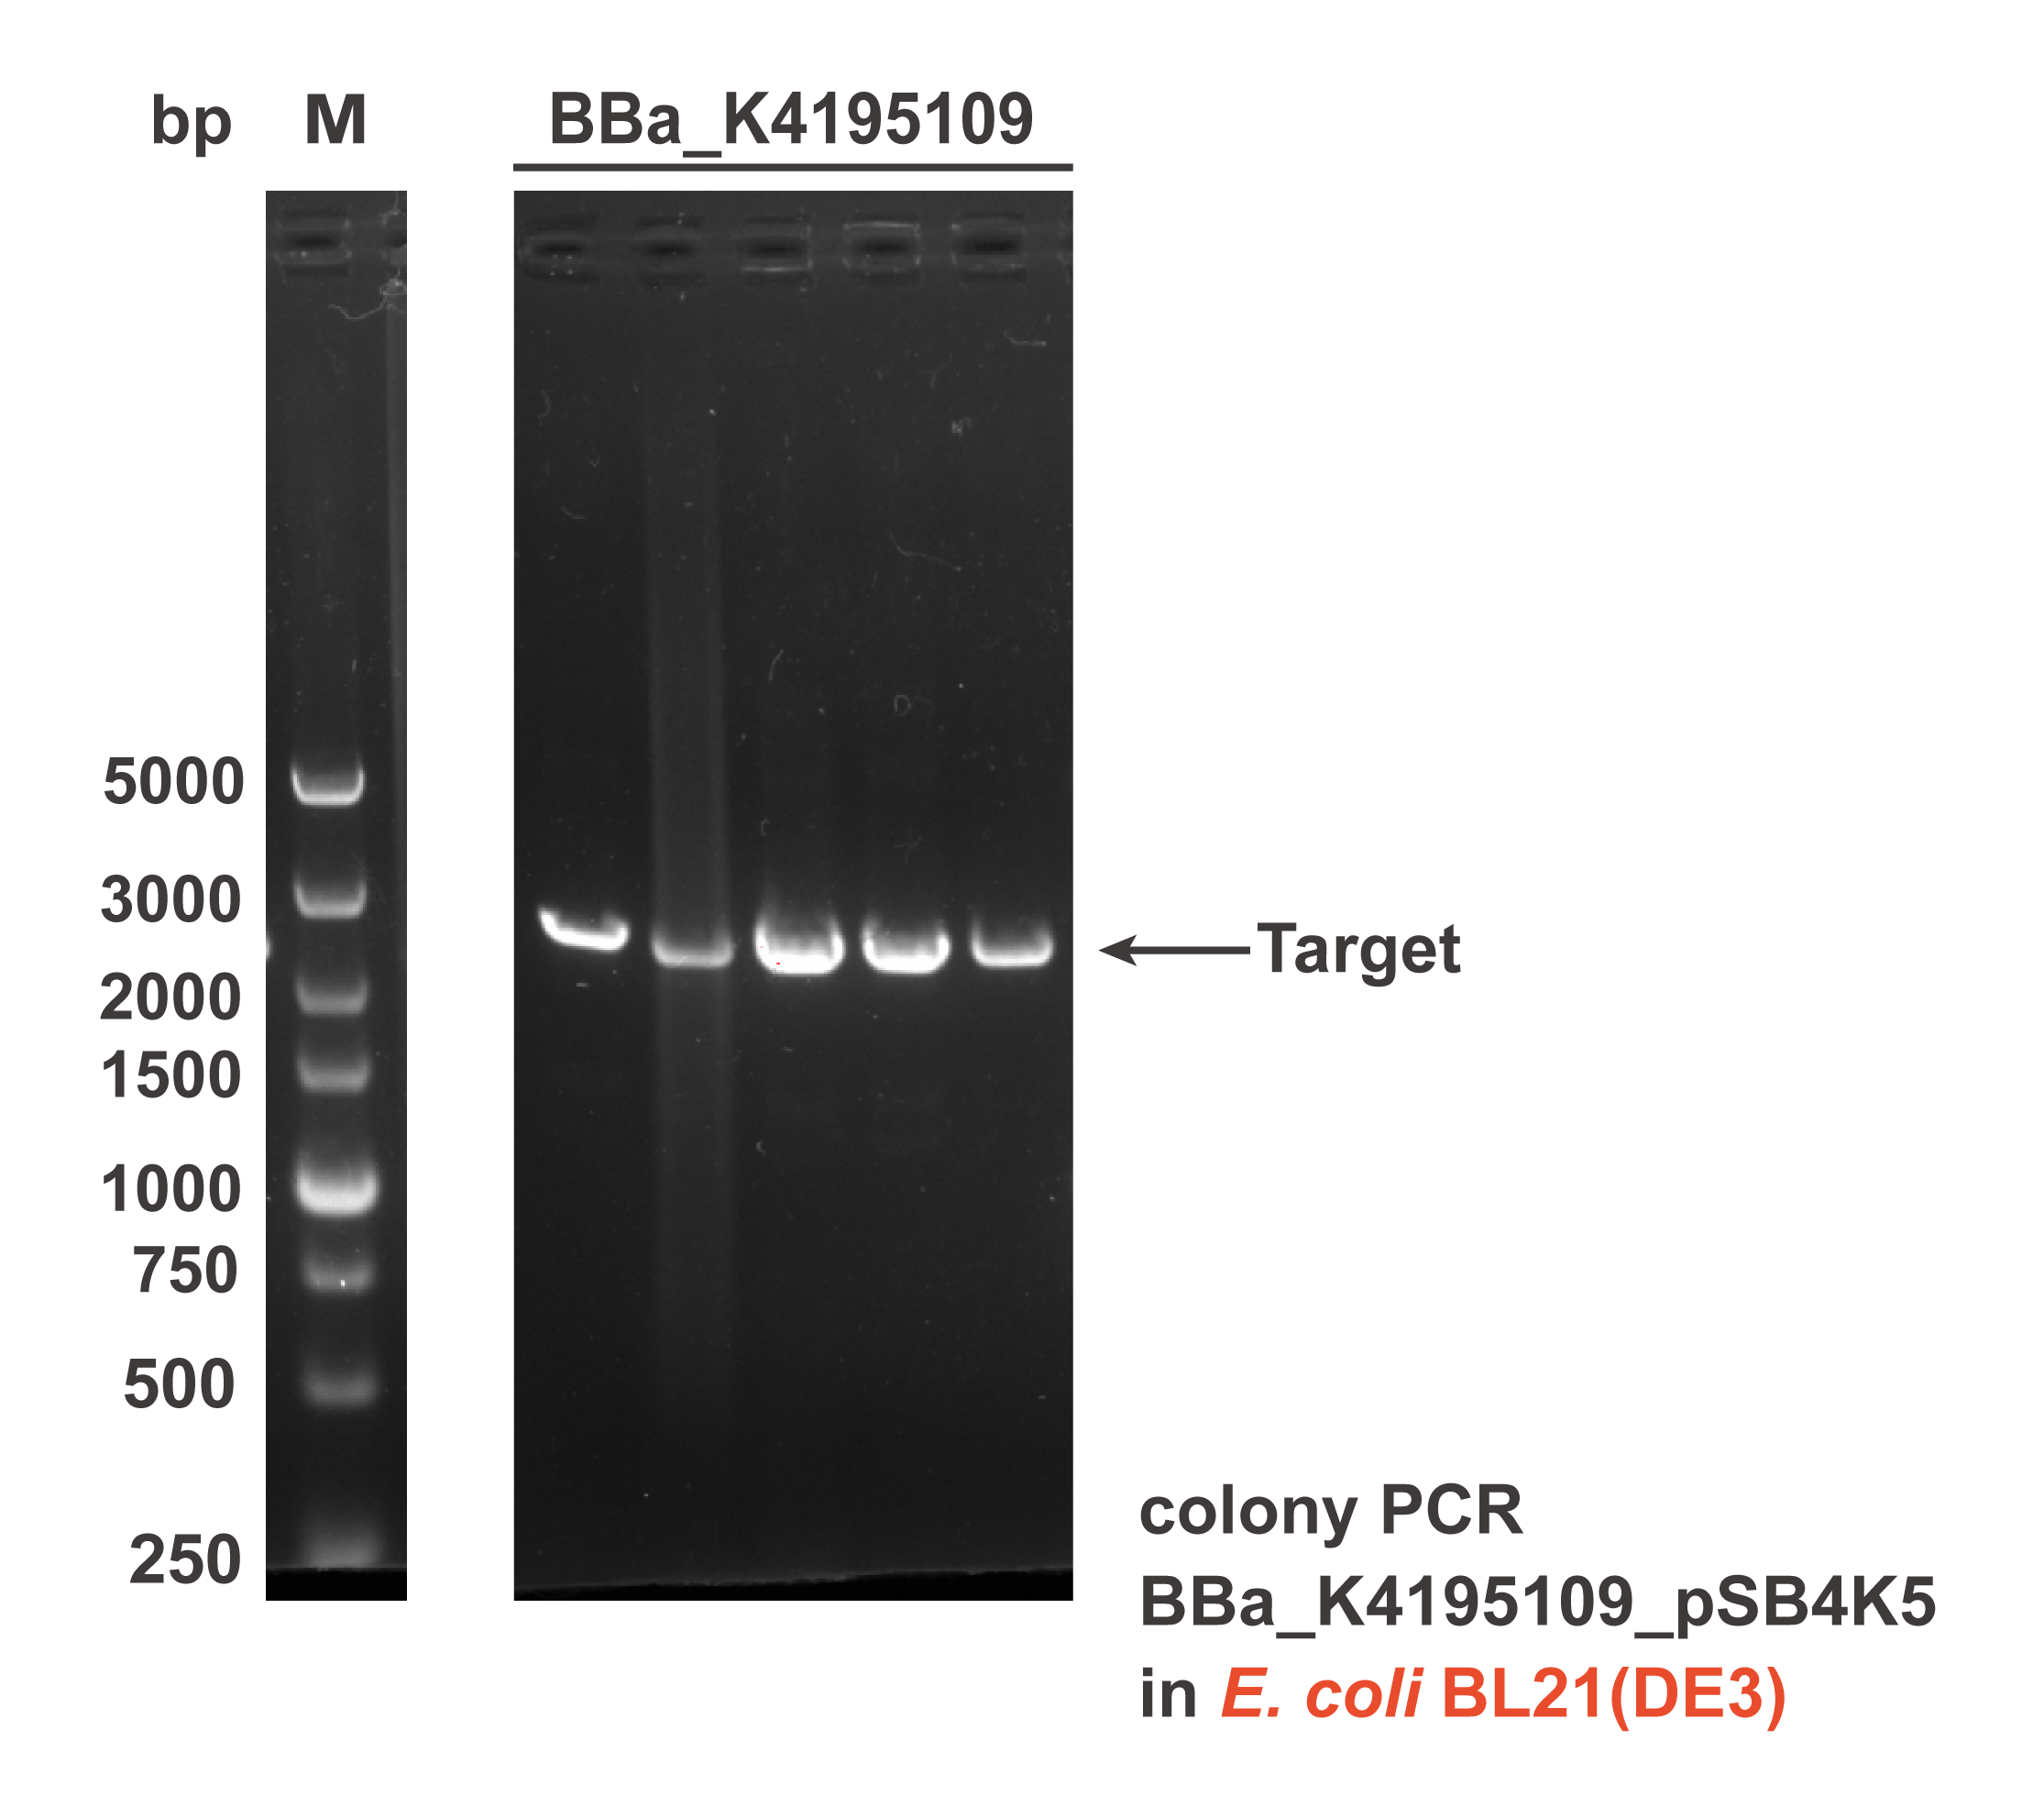 T--XMU-China--BBa K4195109 colony PCR BL21(DE3).png